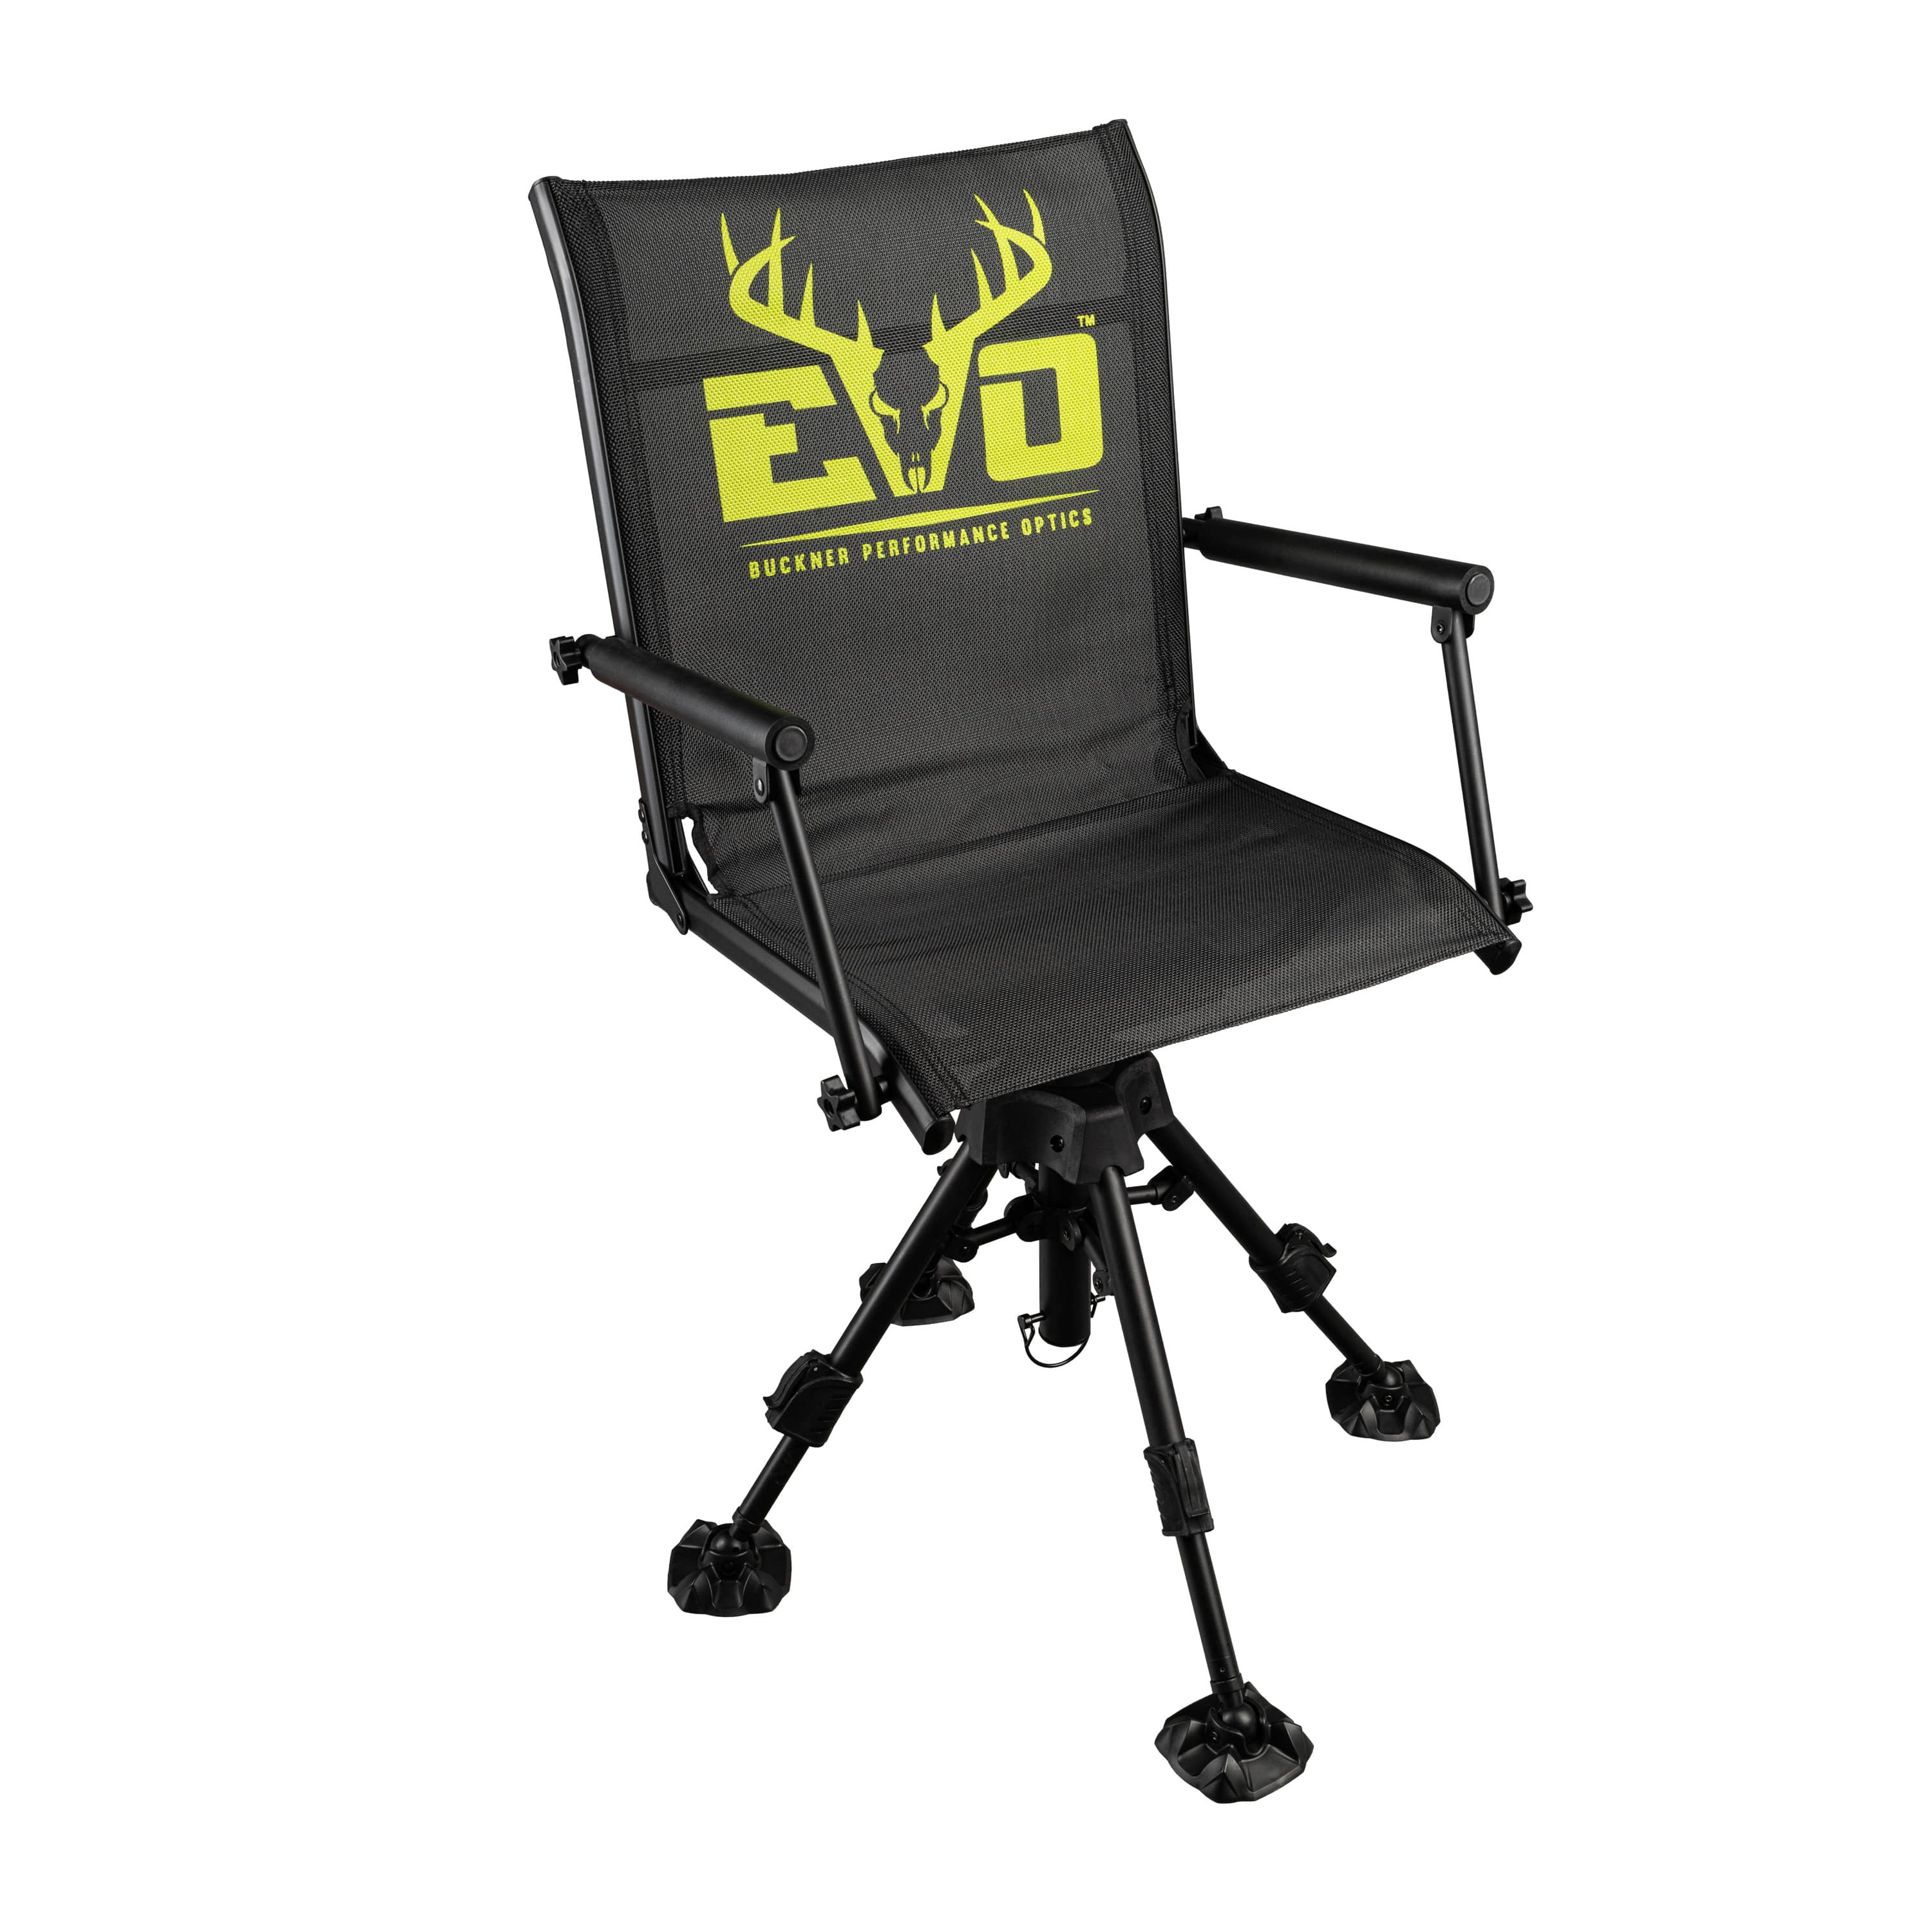 "Evo Trophy" Swivel chair